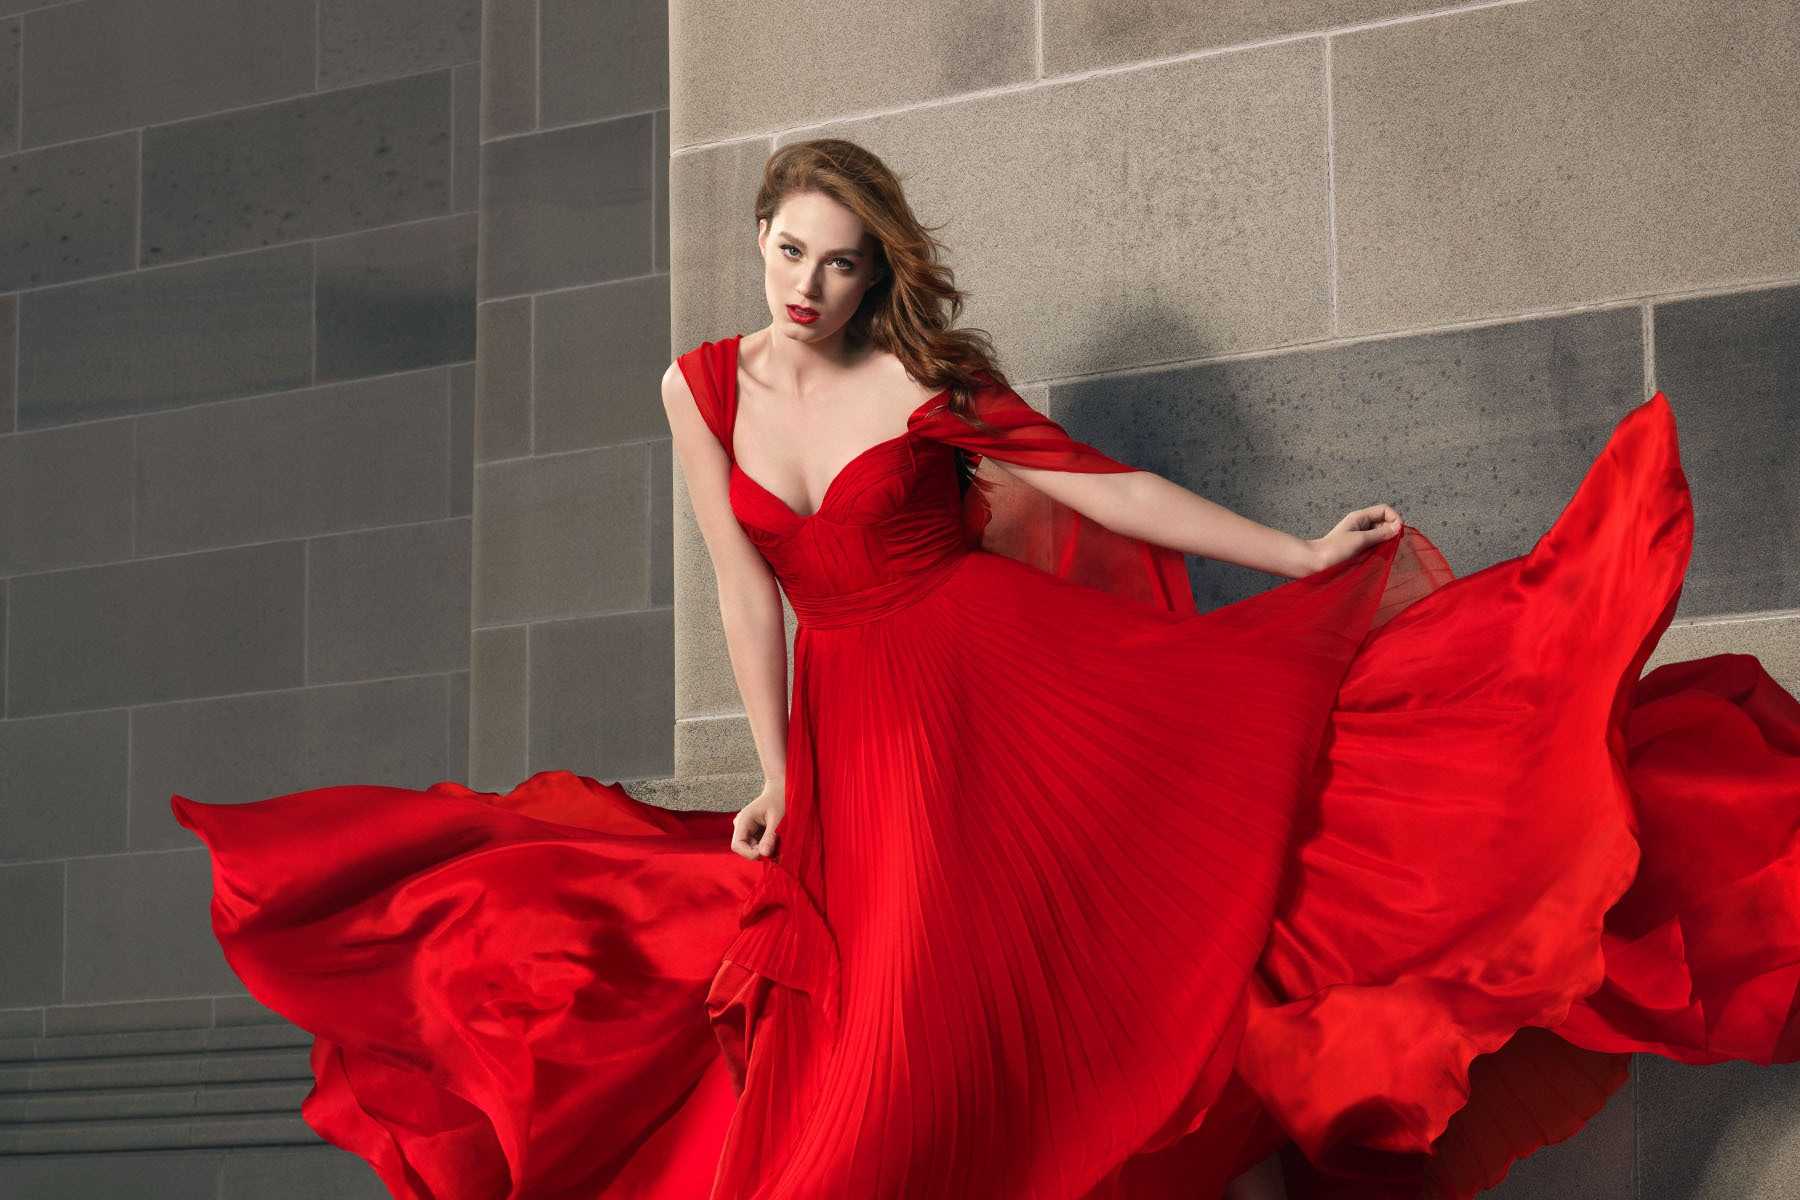 Avon  little red dress (2011) — аромат для женщин: описание, отзывы, рекомендации по выбору